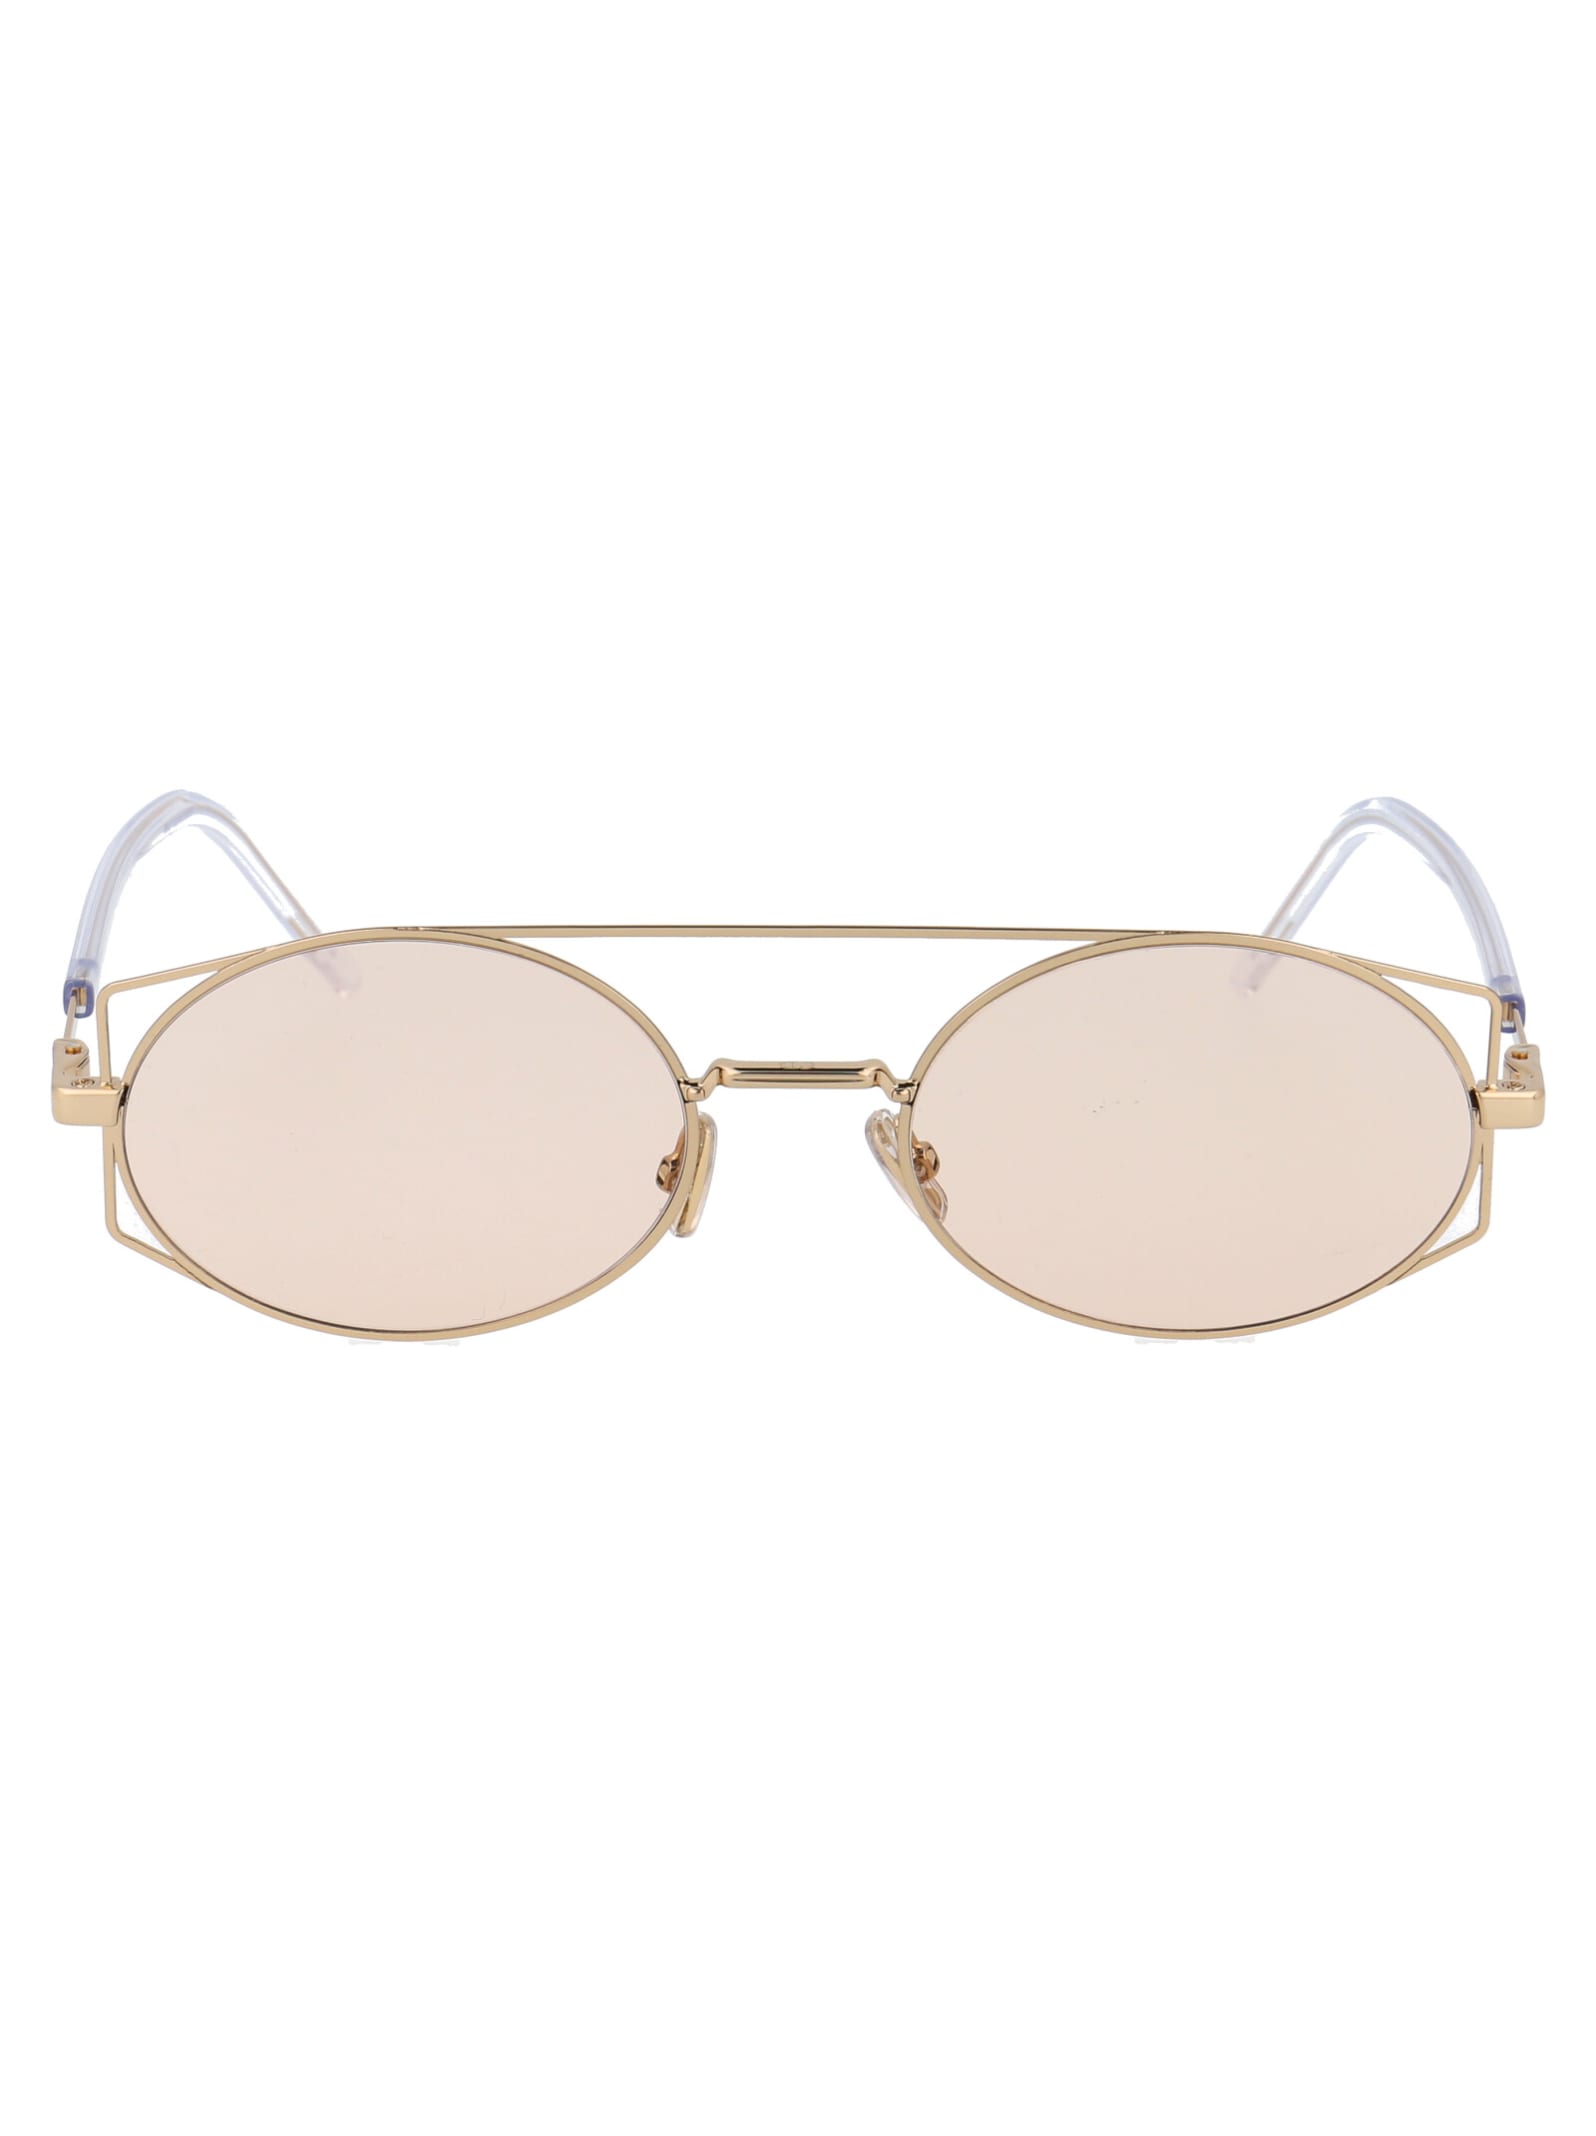 Dior Eyewear Architectural Sunglasses